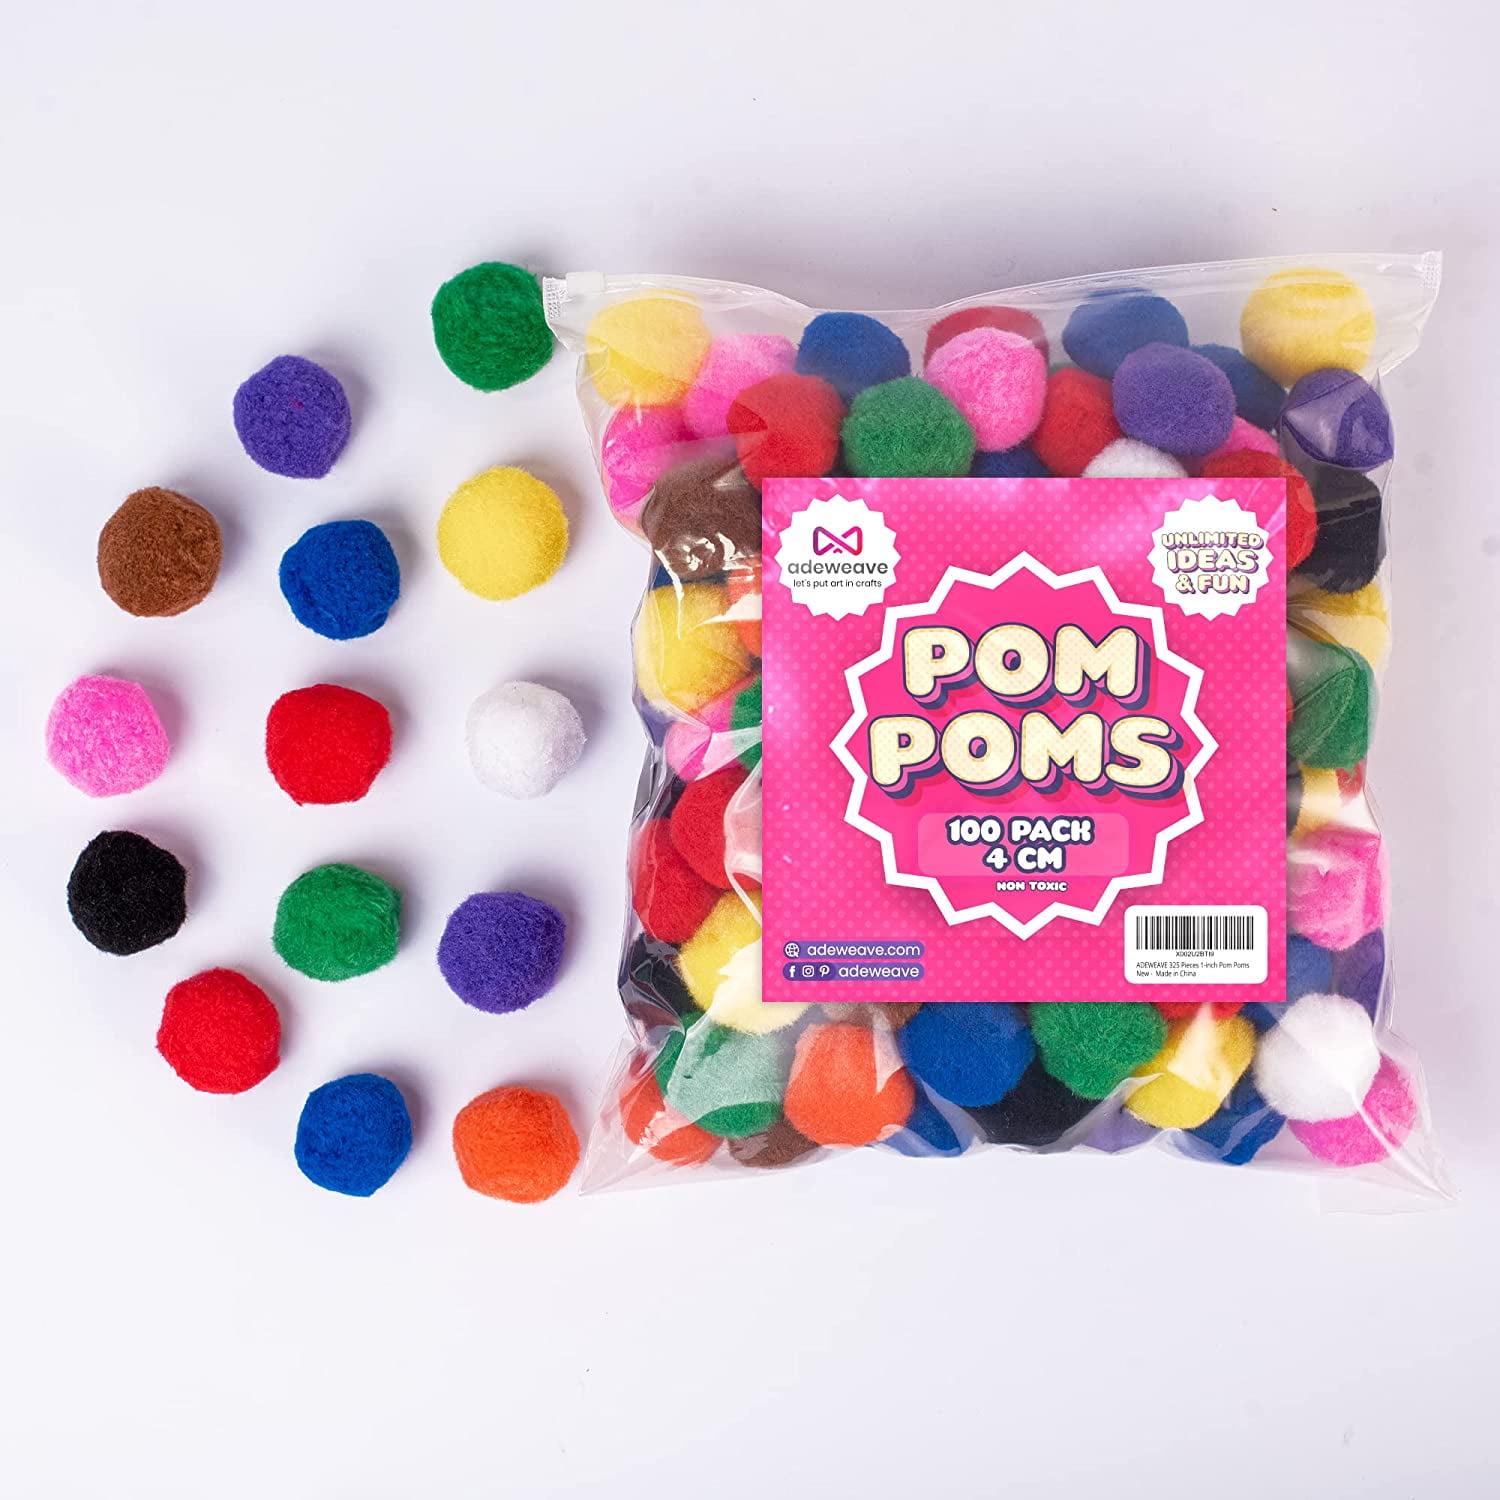  Bundooraking Pom Poms, 1.5 inch (4cm) 90pcs Multicolor